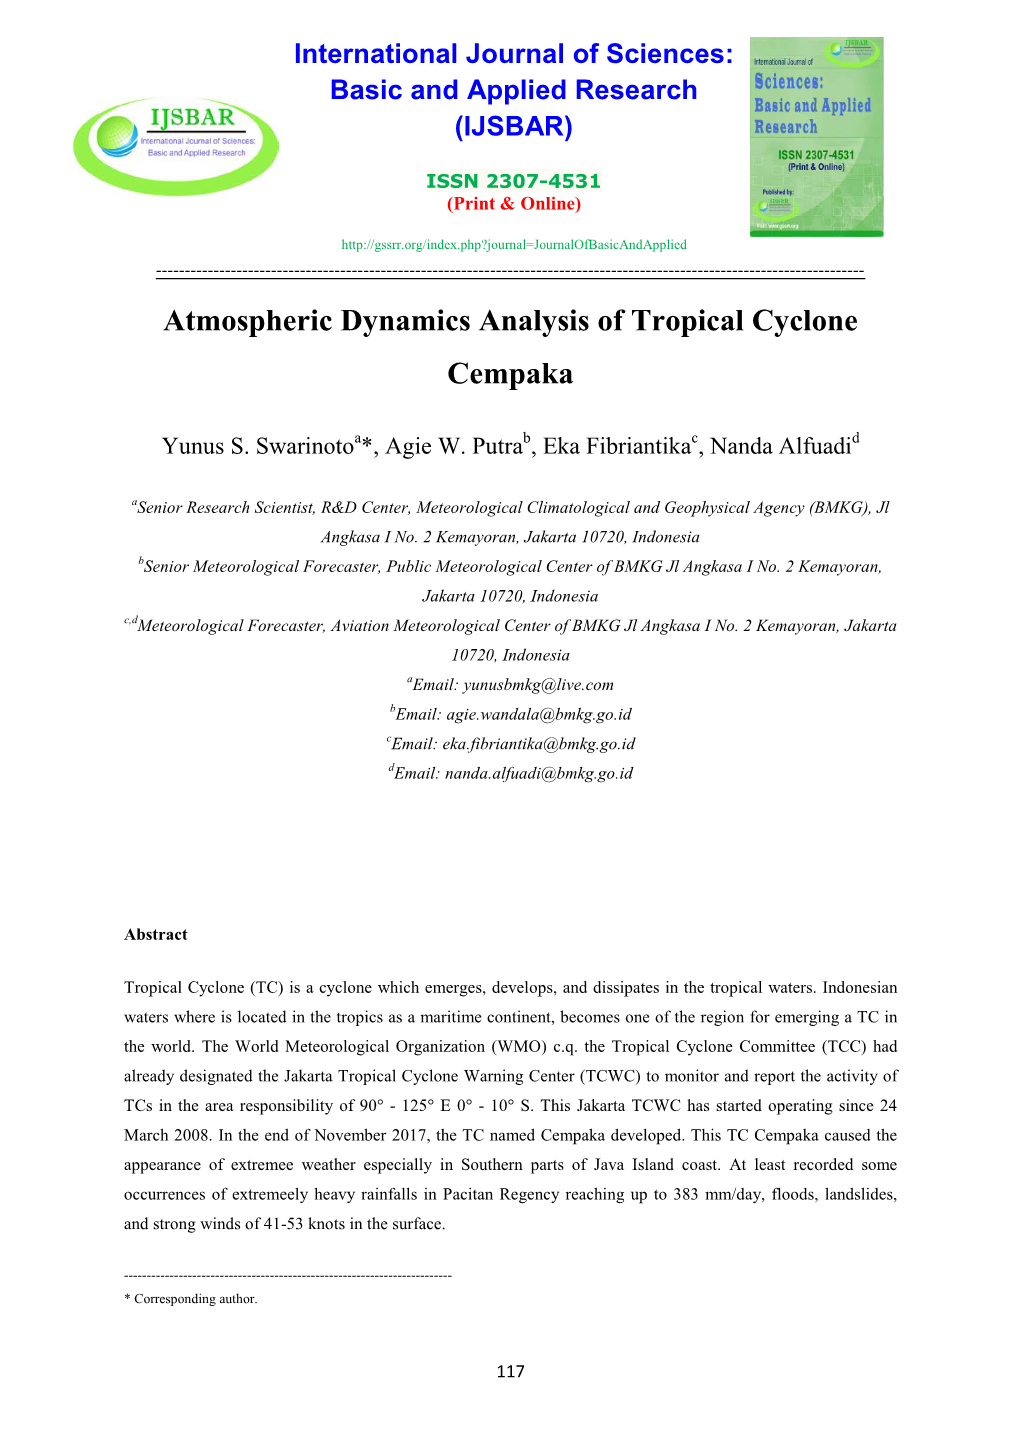 Atmospheric Dynamics Analysis of Tropical Cyclone Cempaka